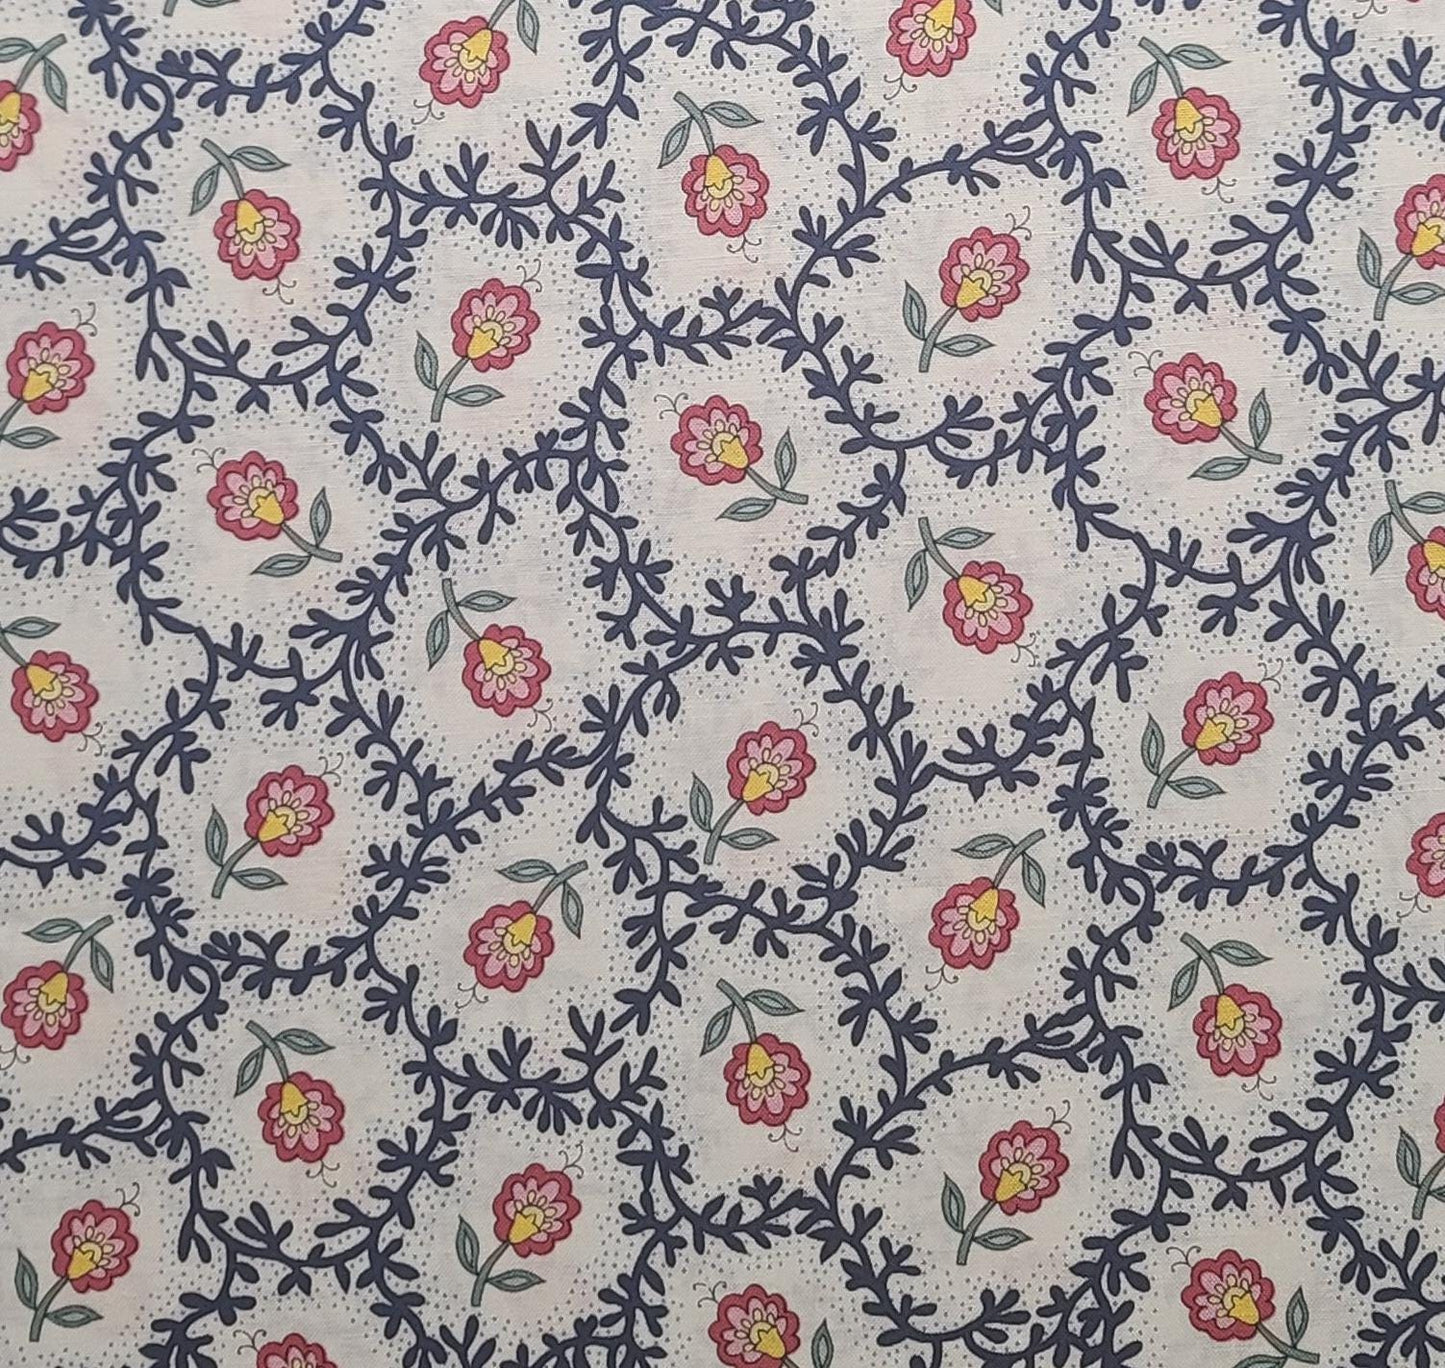 EOB - Provence II by Doreen Speckman for Clothworks - White Fabric / Dark Blue Vine / Red, Pink Flower Print